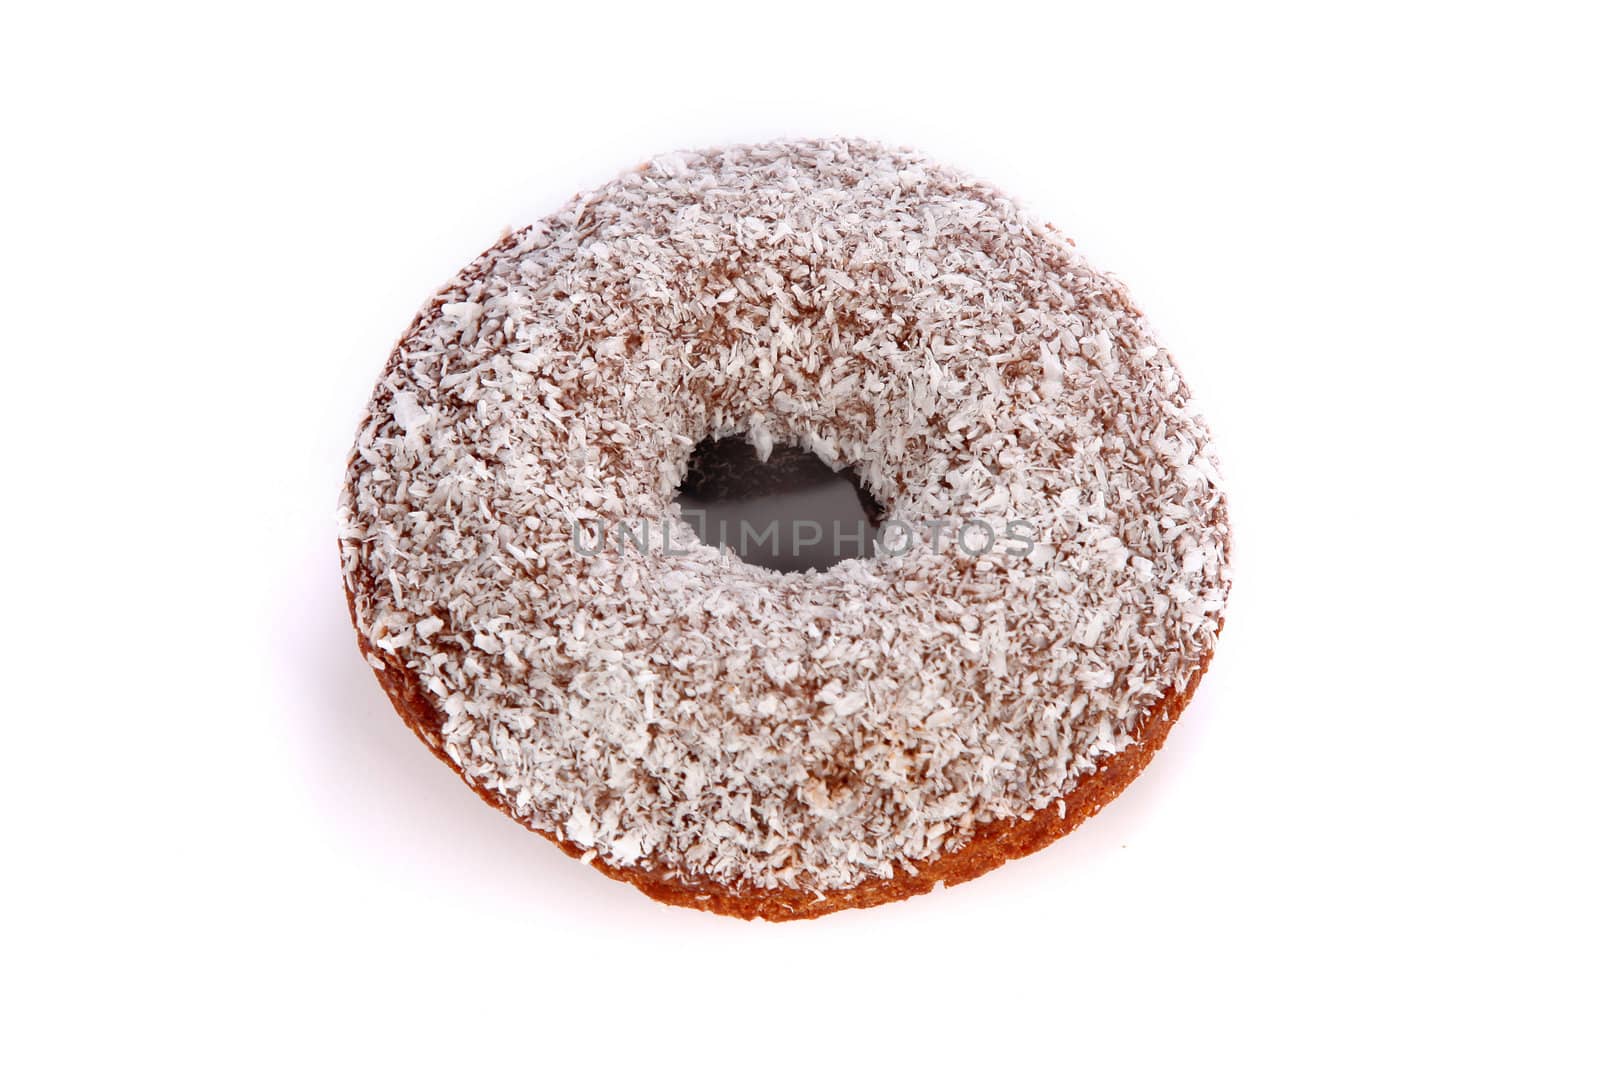 Close up shot of donut on white background